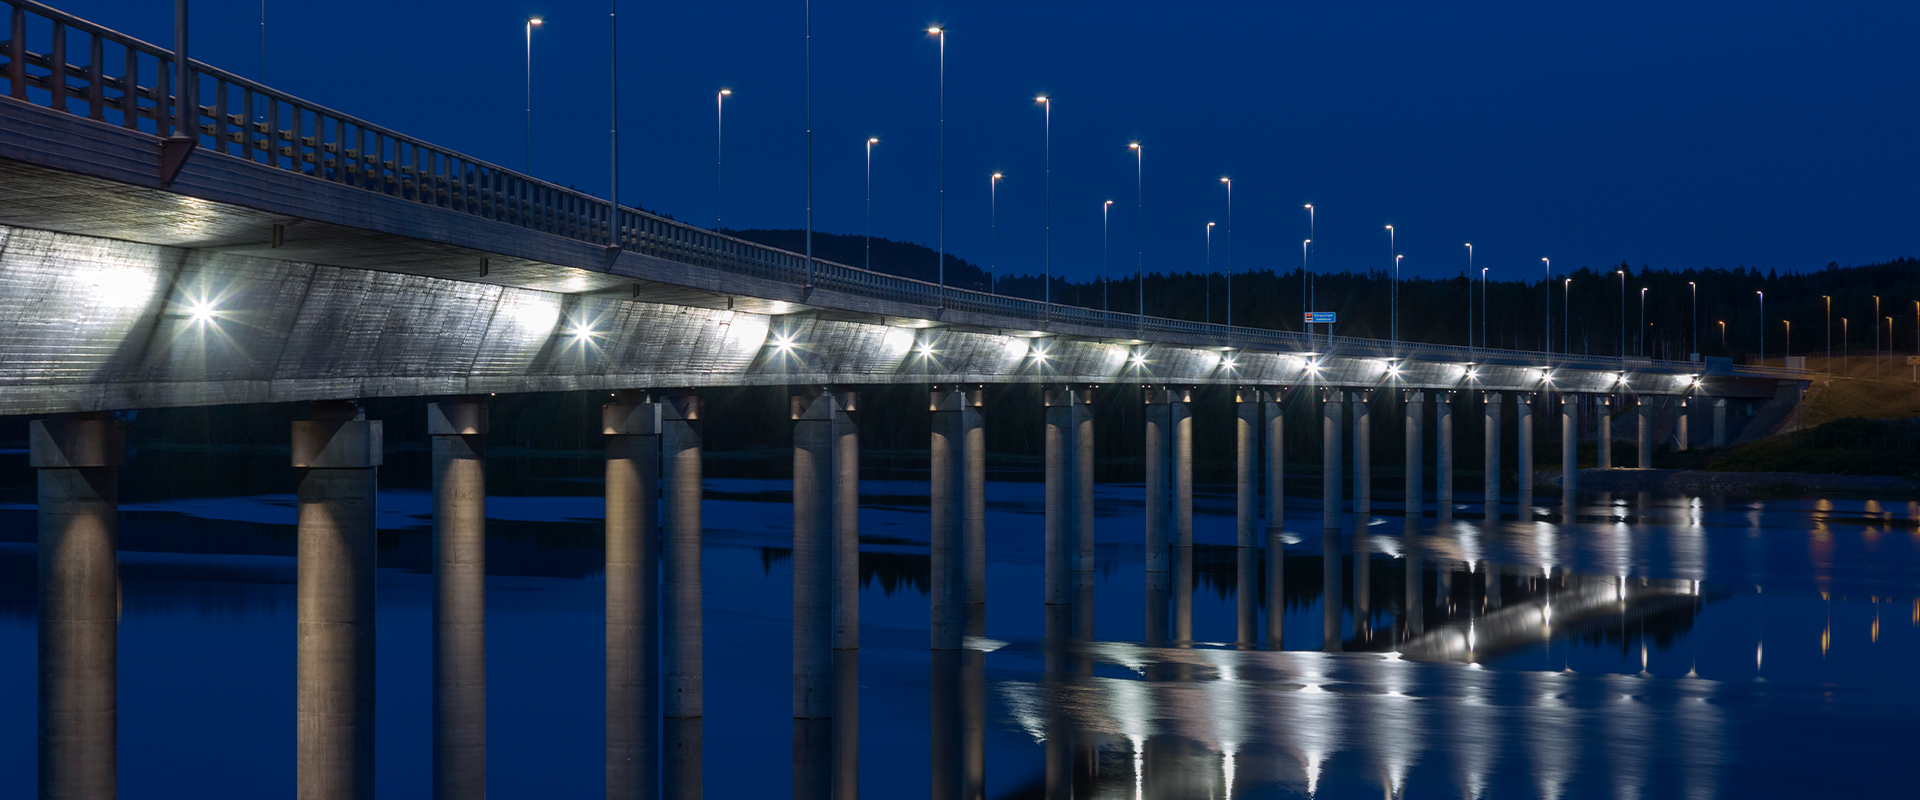 LED street lighting of the Tresfjord Bridge